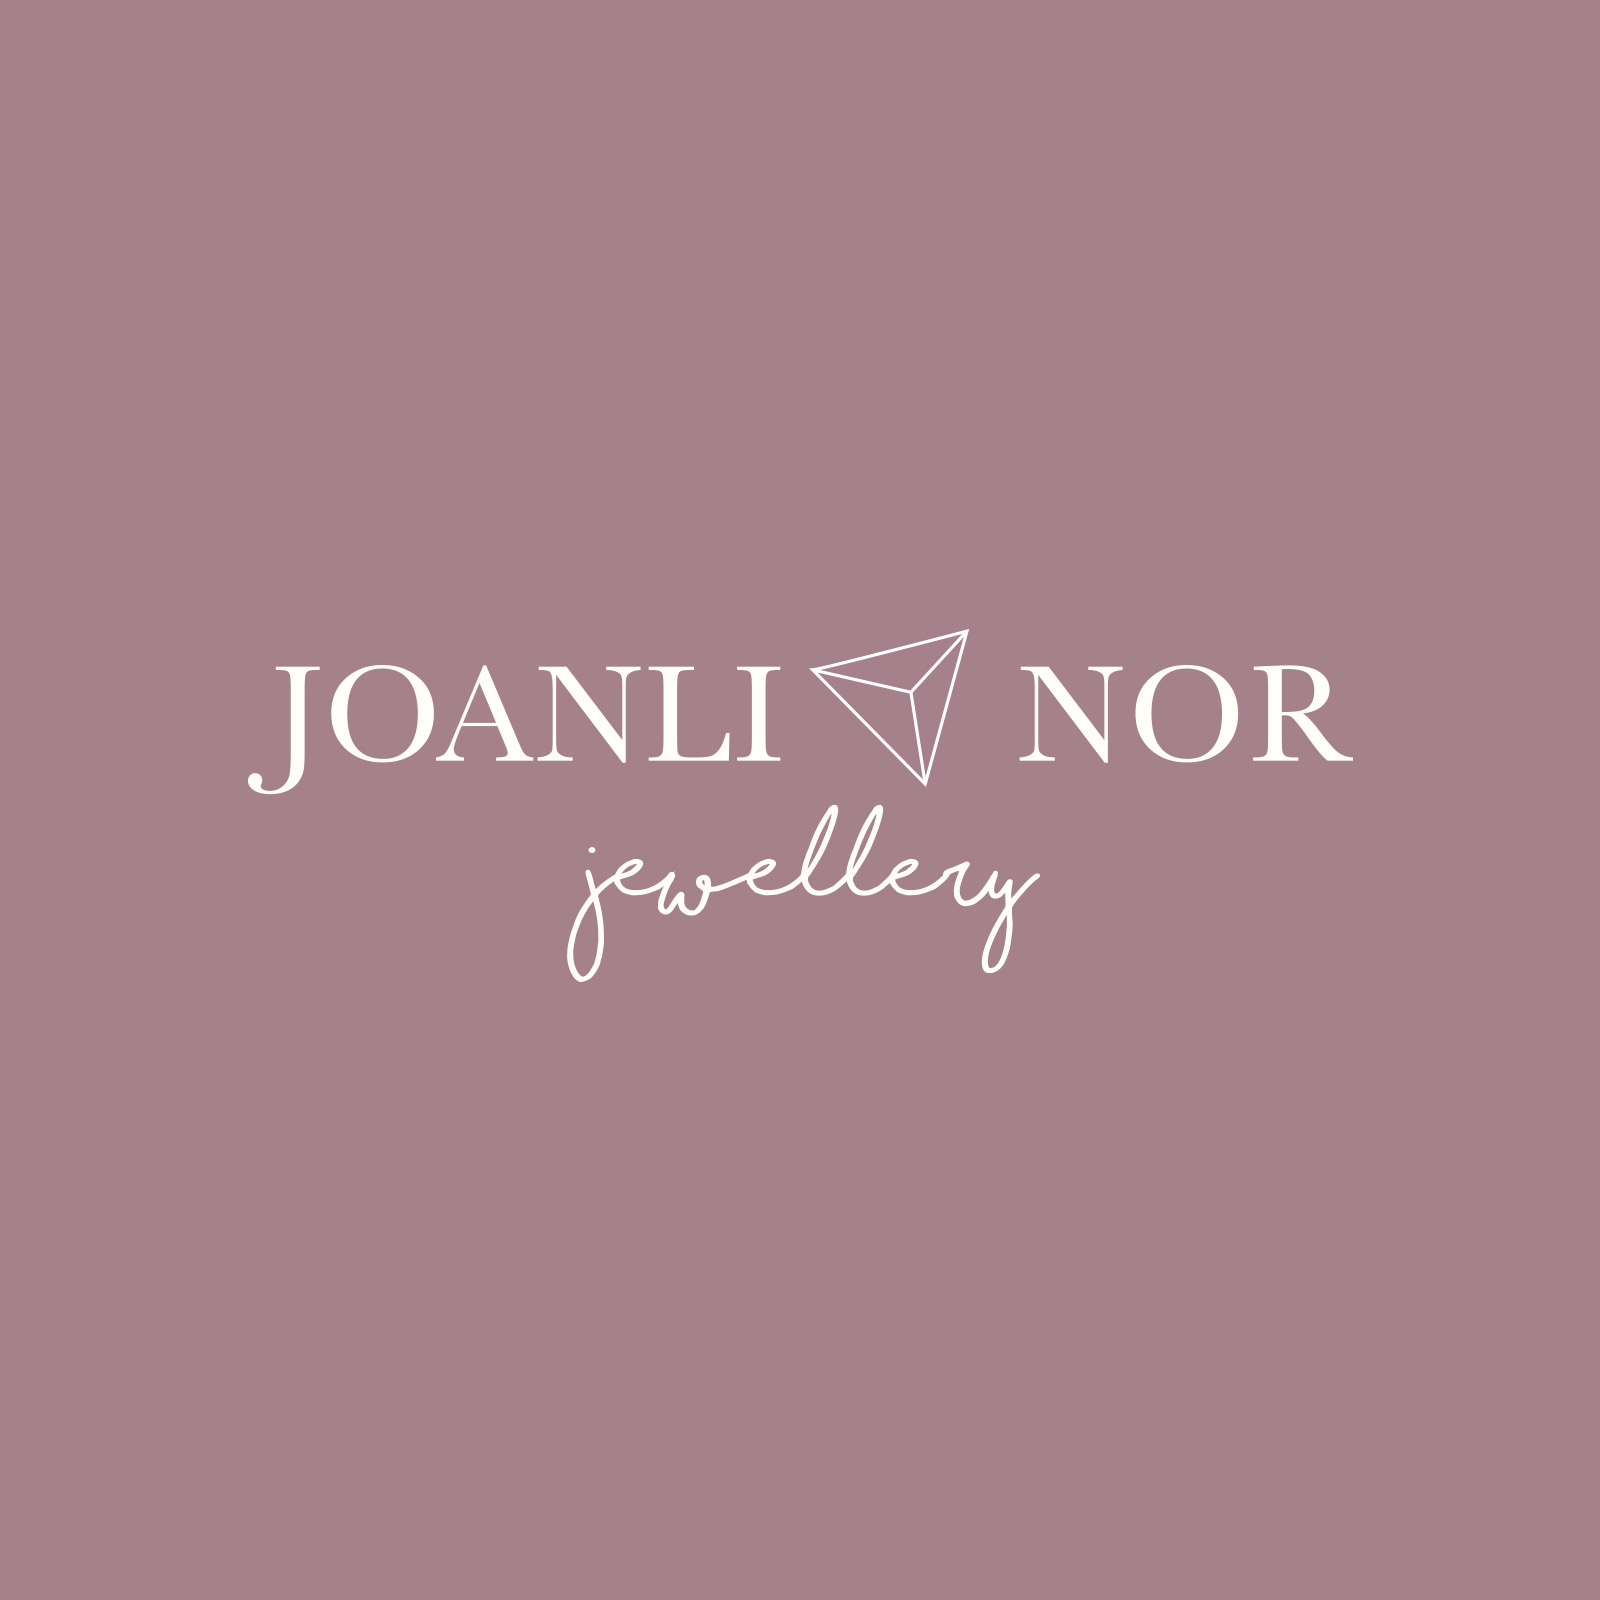 Joanli nor logo